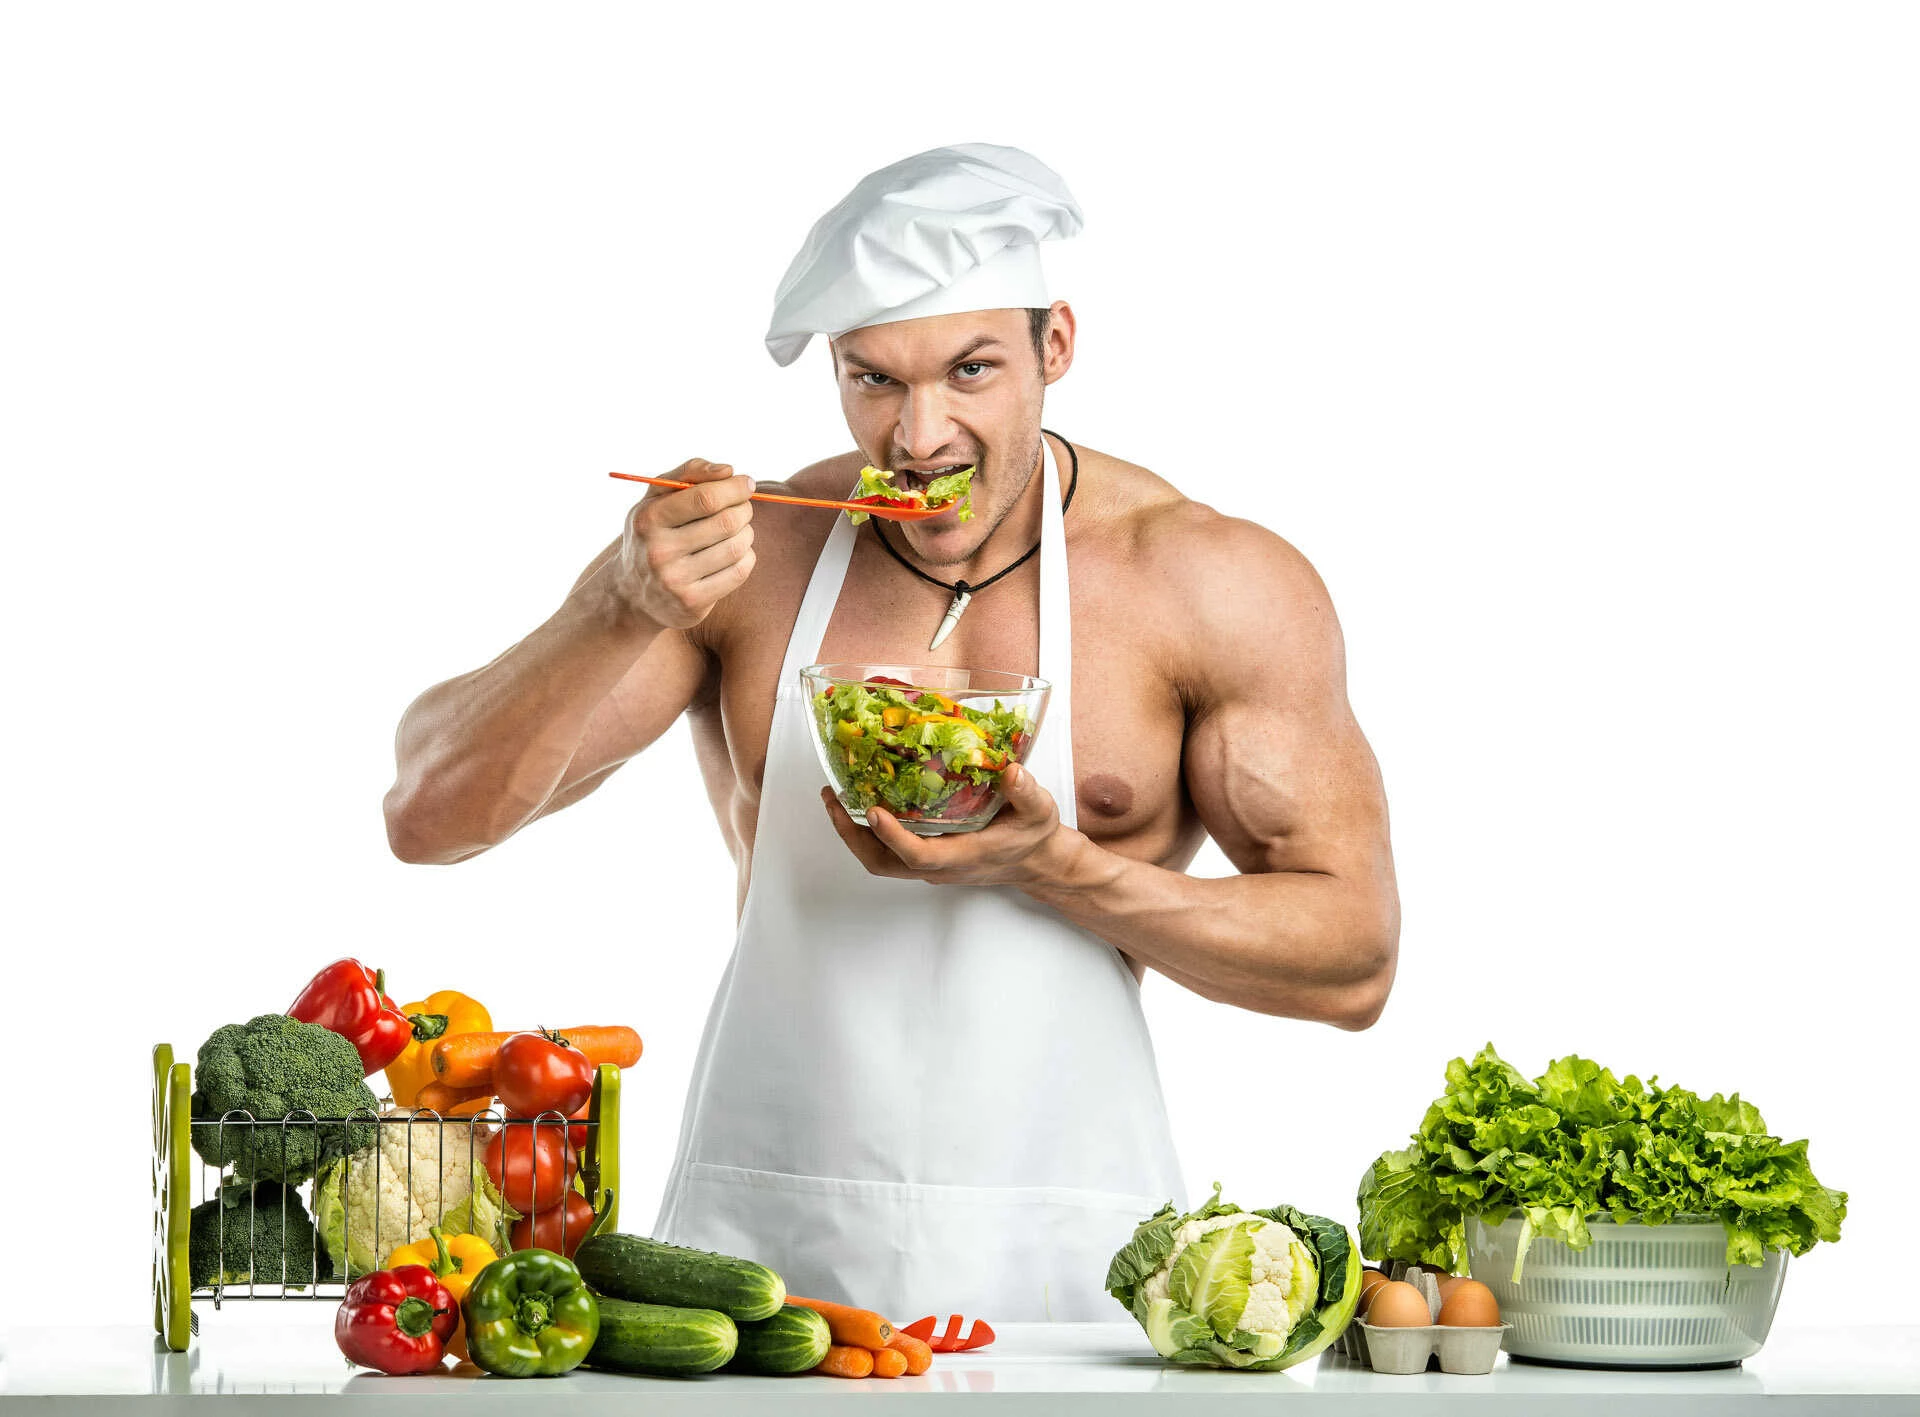 Vegetarian menu for muscle growth